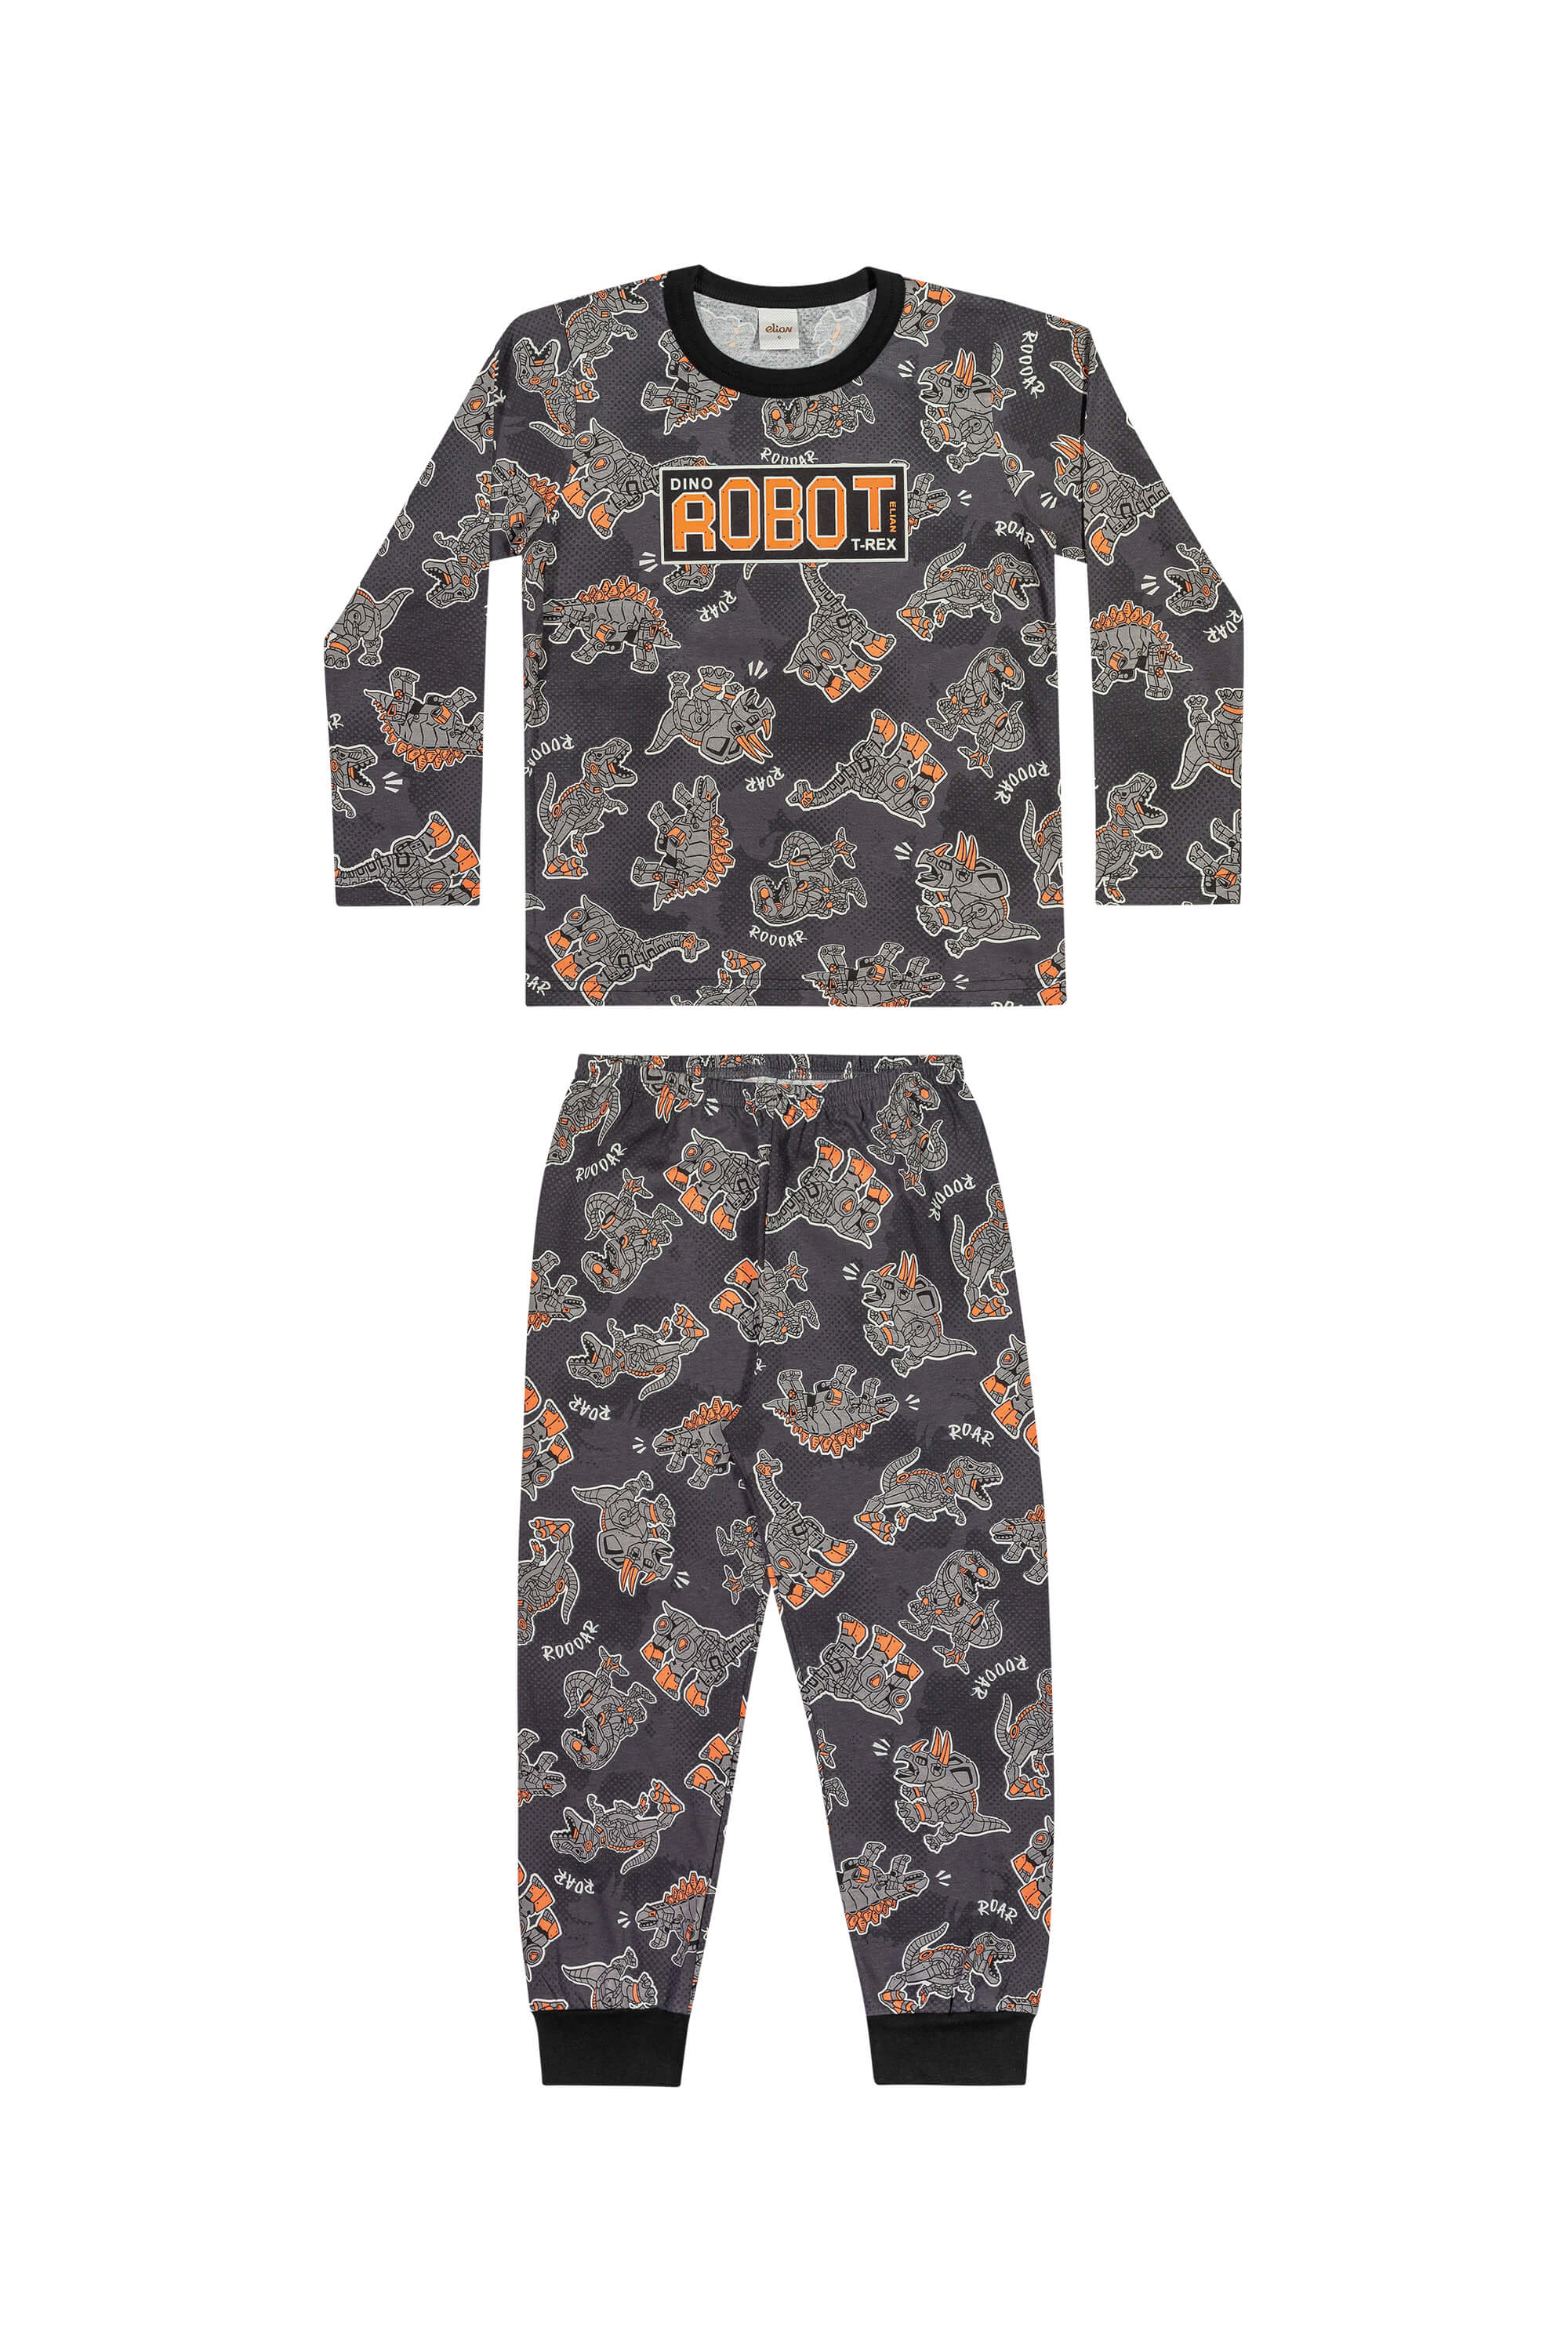 Pijama Infantil Roblox Logo